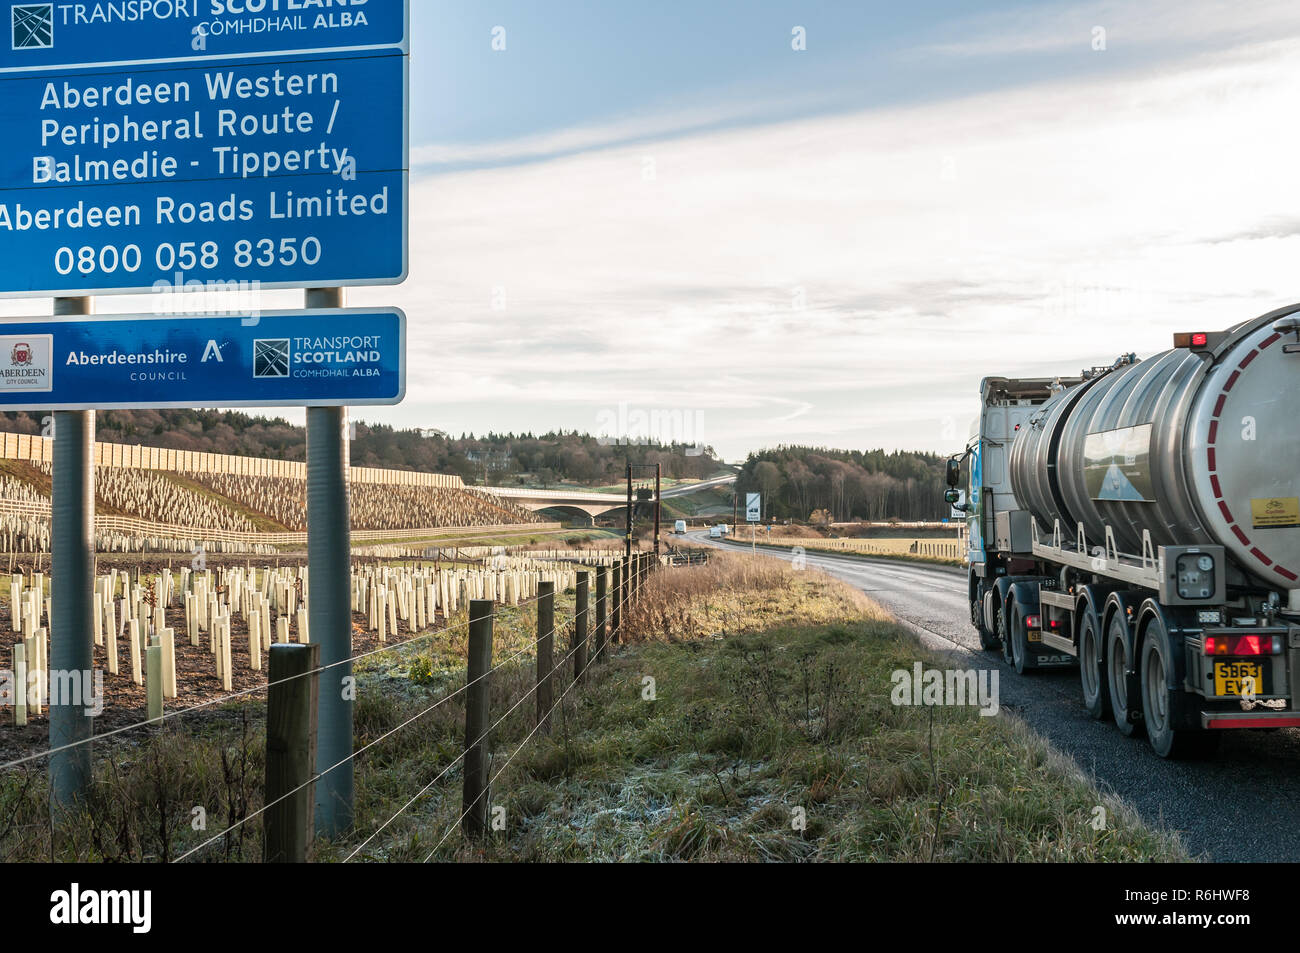 AWPR Aberdeen Bypass, Escocia Foto de stock